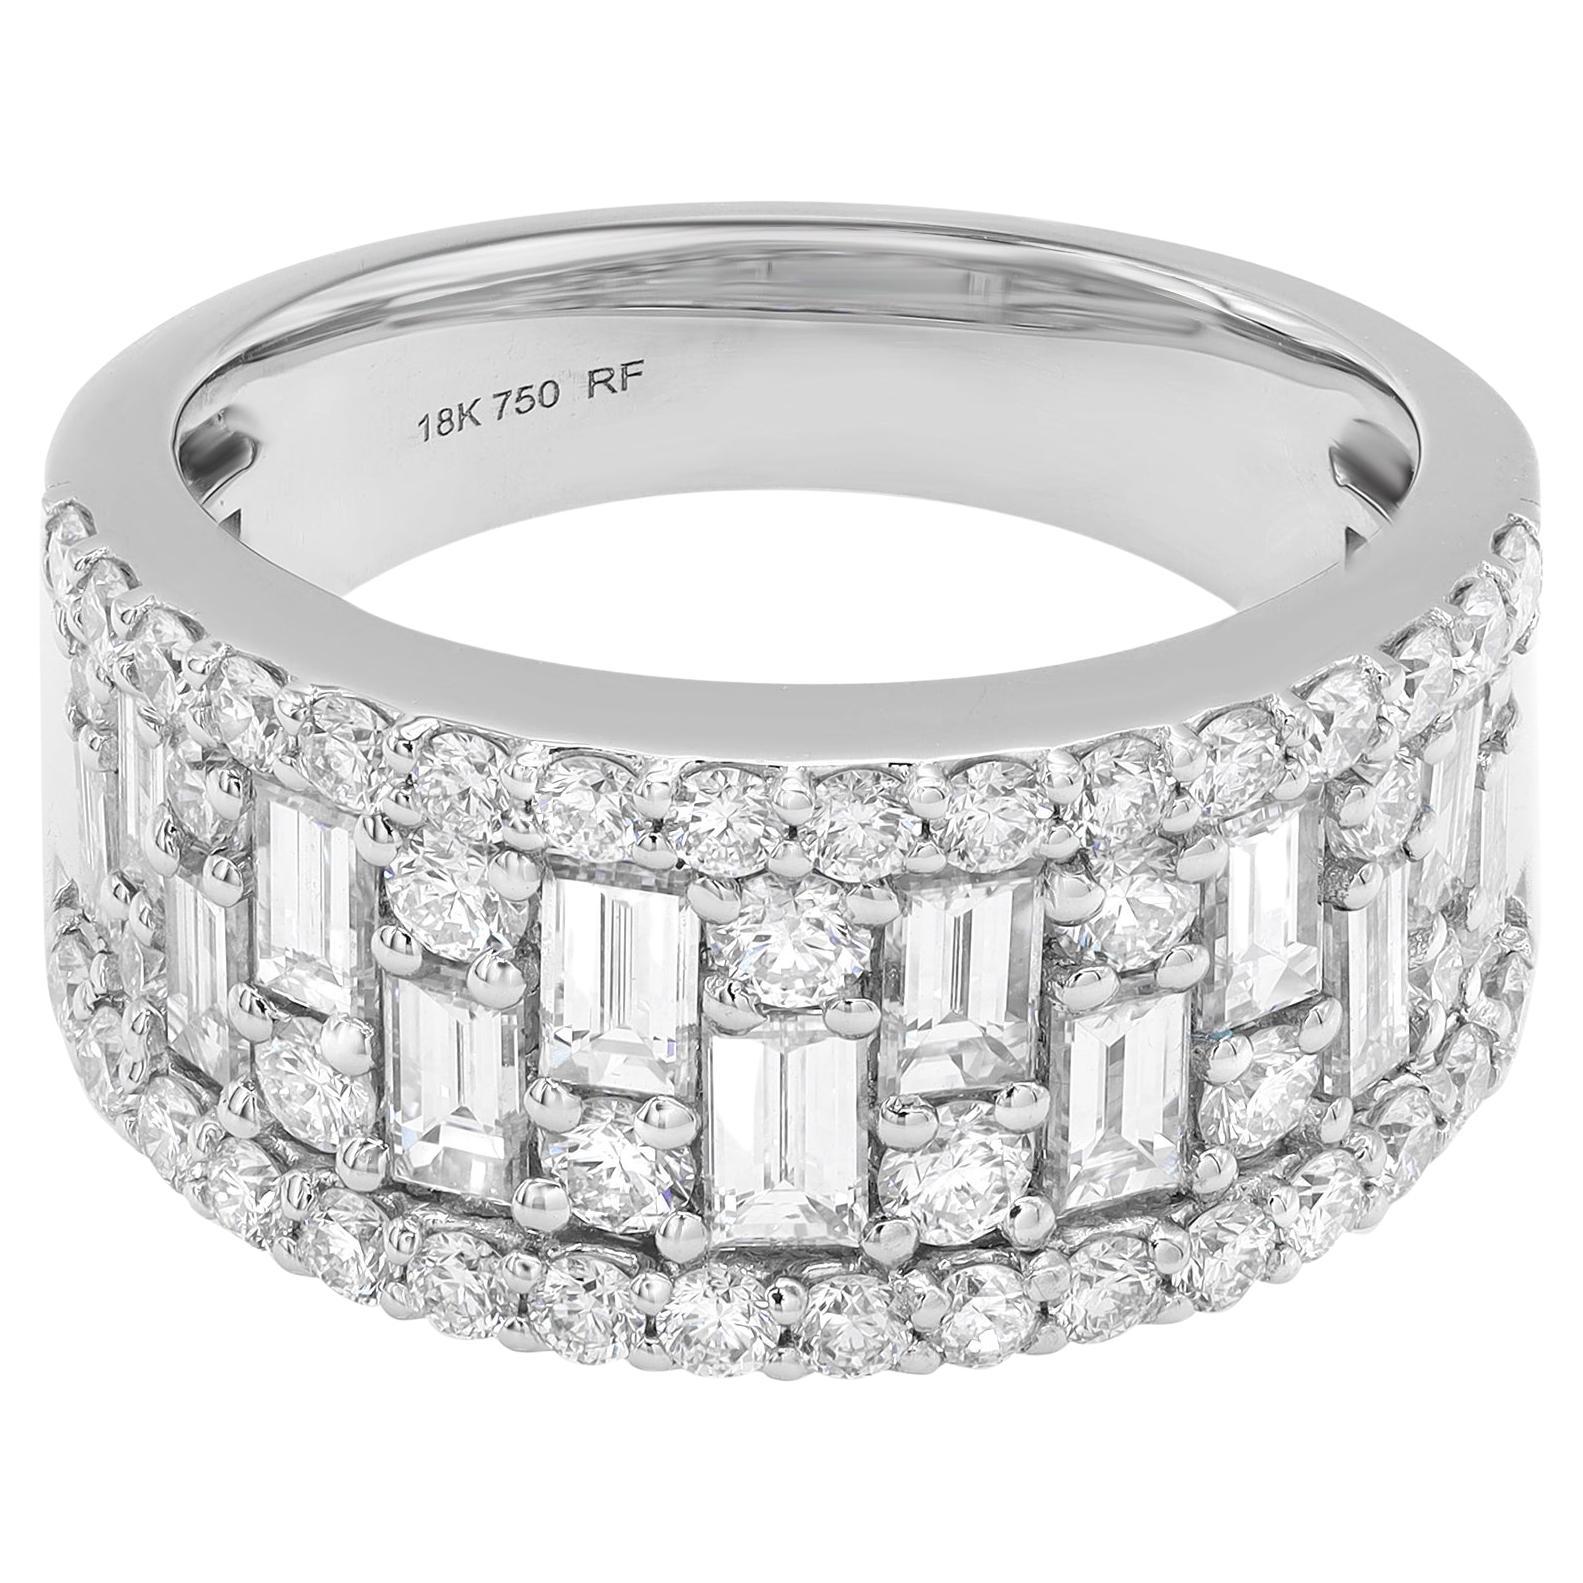 Rachel Koen Baguette Round Cut Diamond Ring 18K White Gold 2.11Cttw